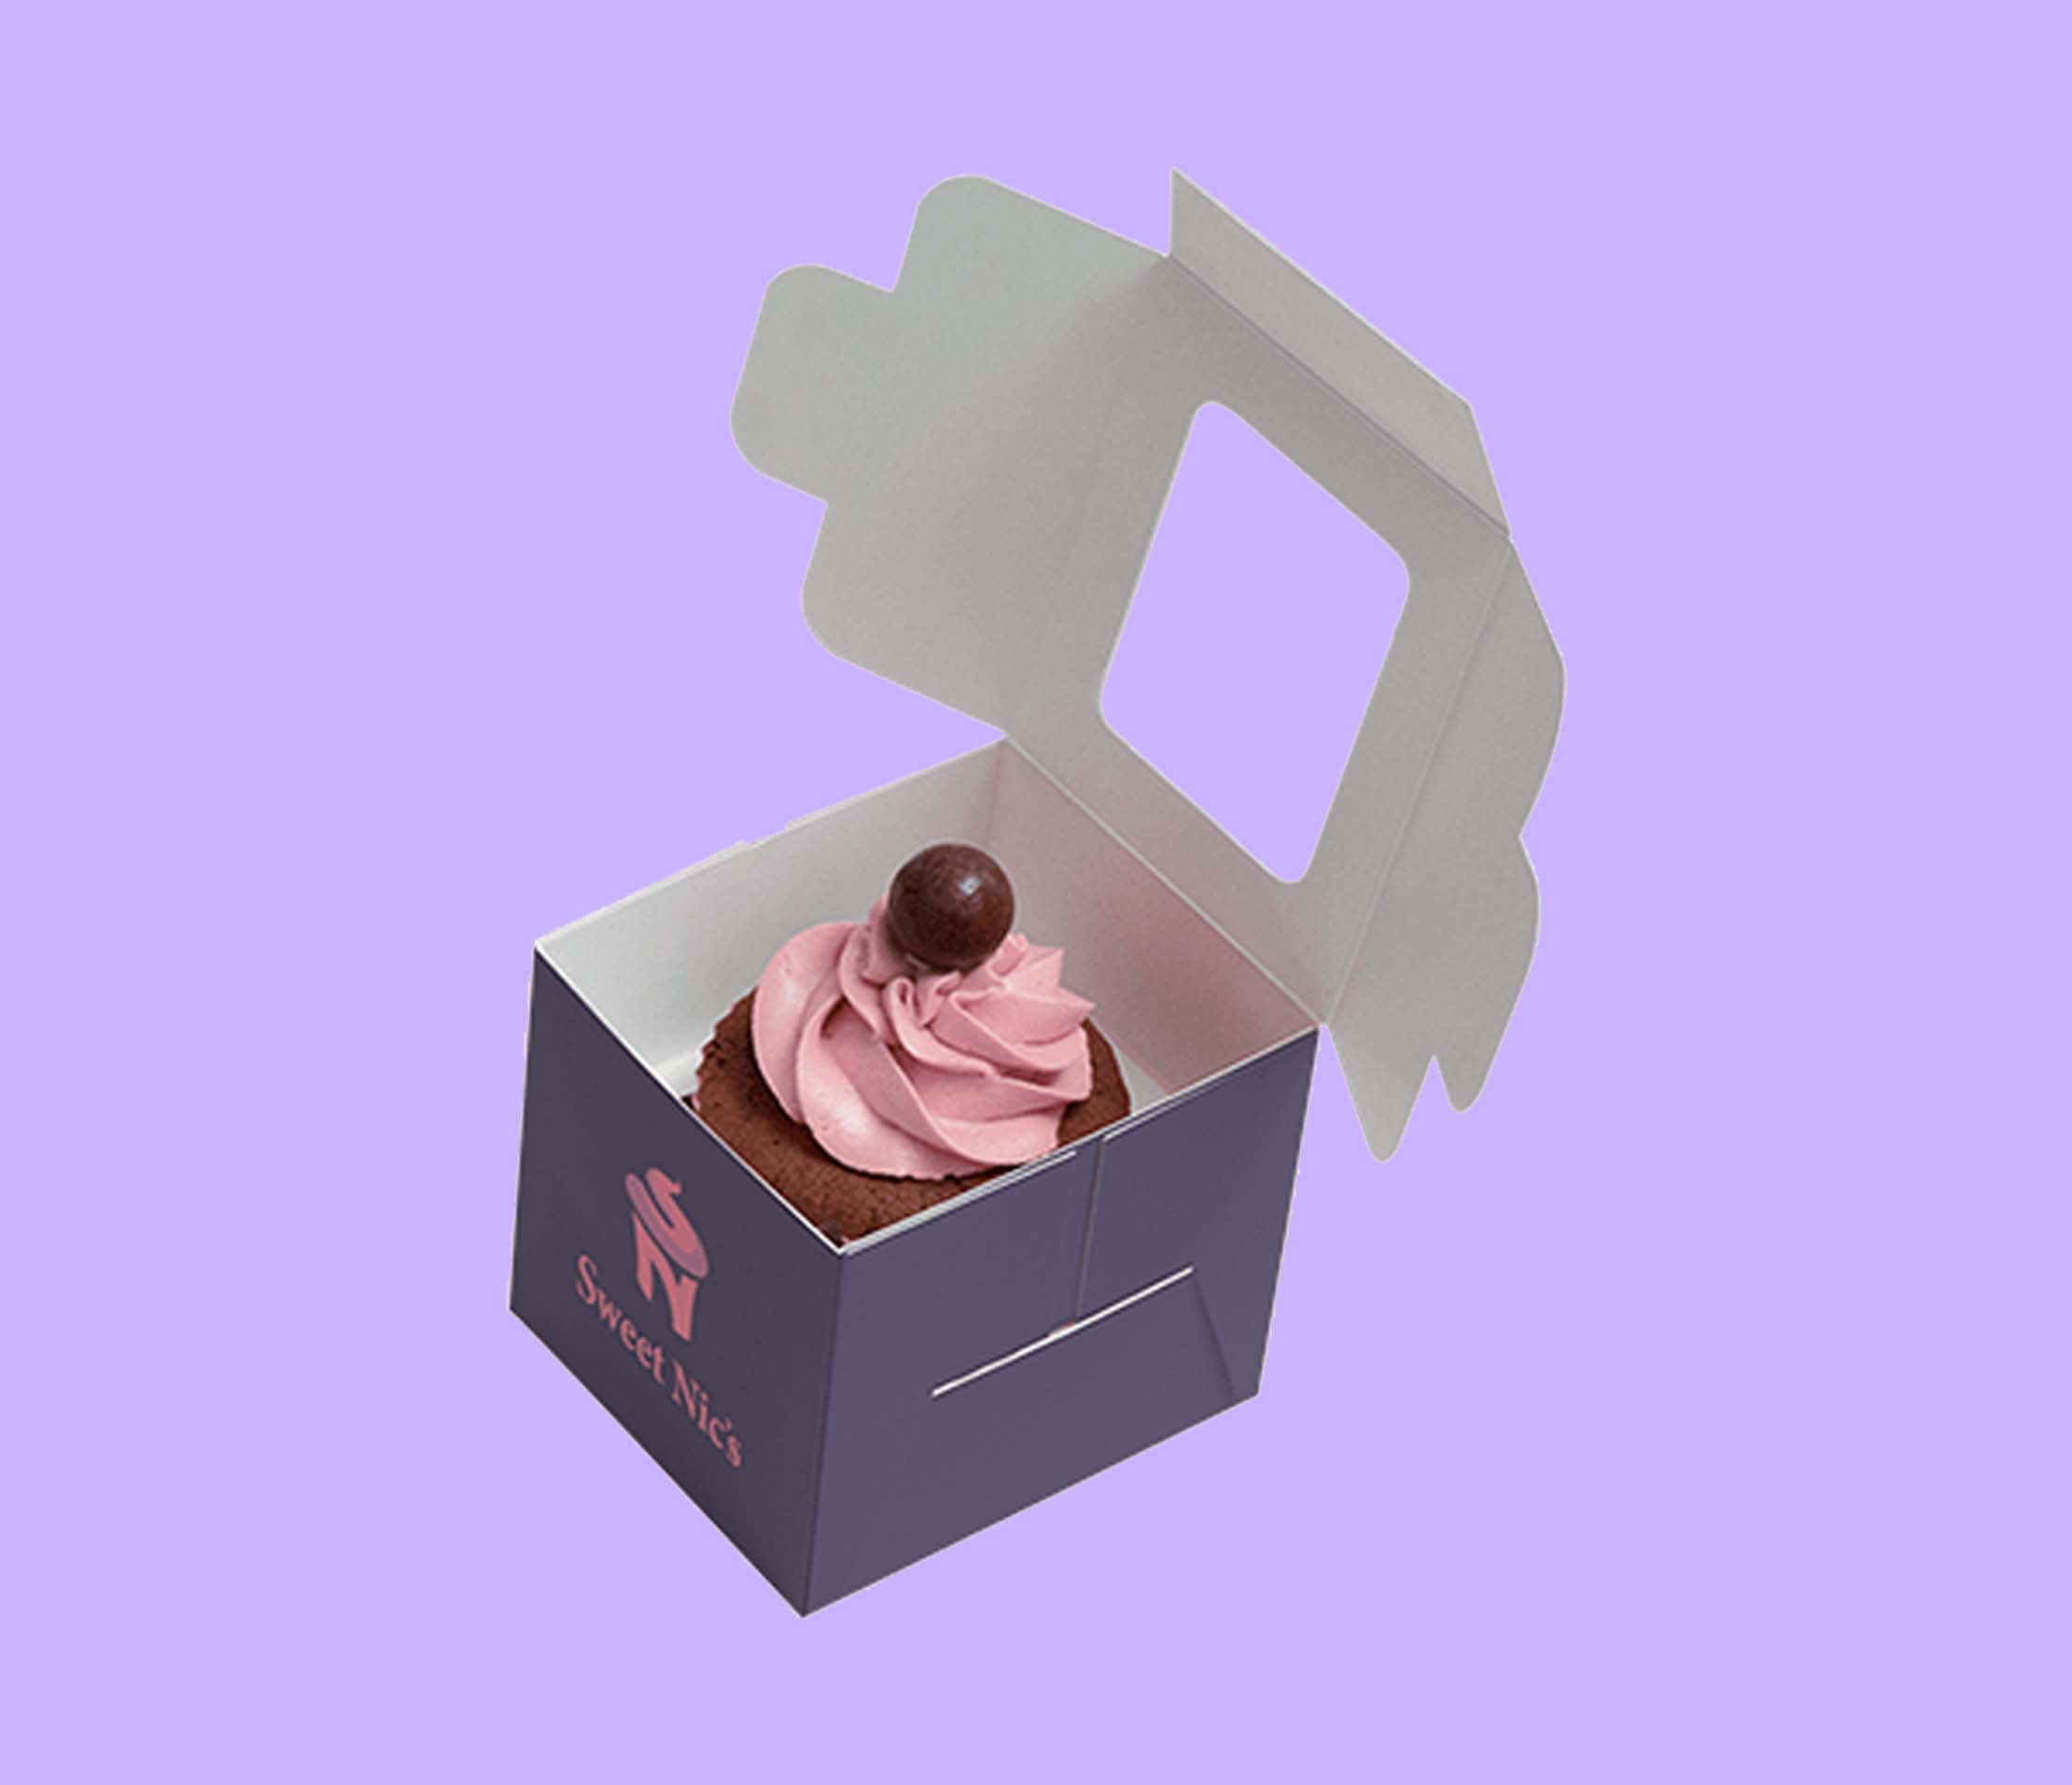 Individual Cupcake Boxes 